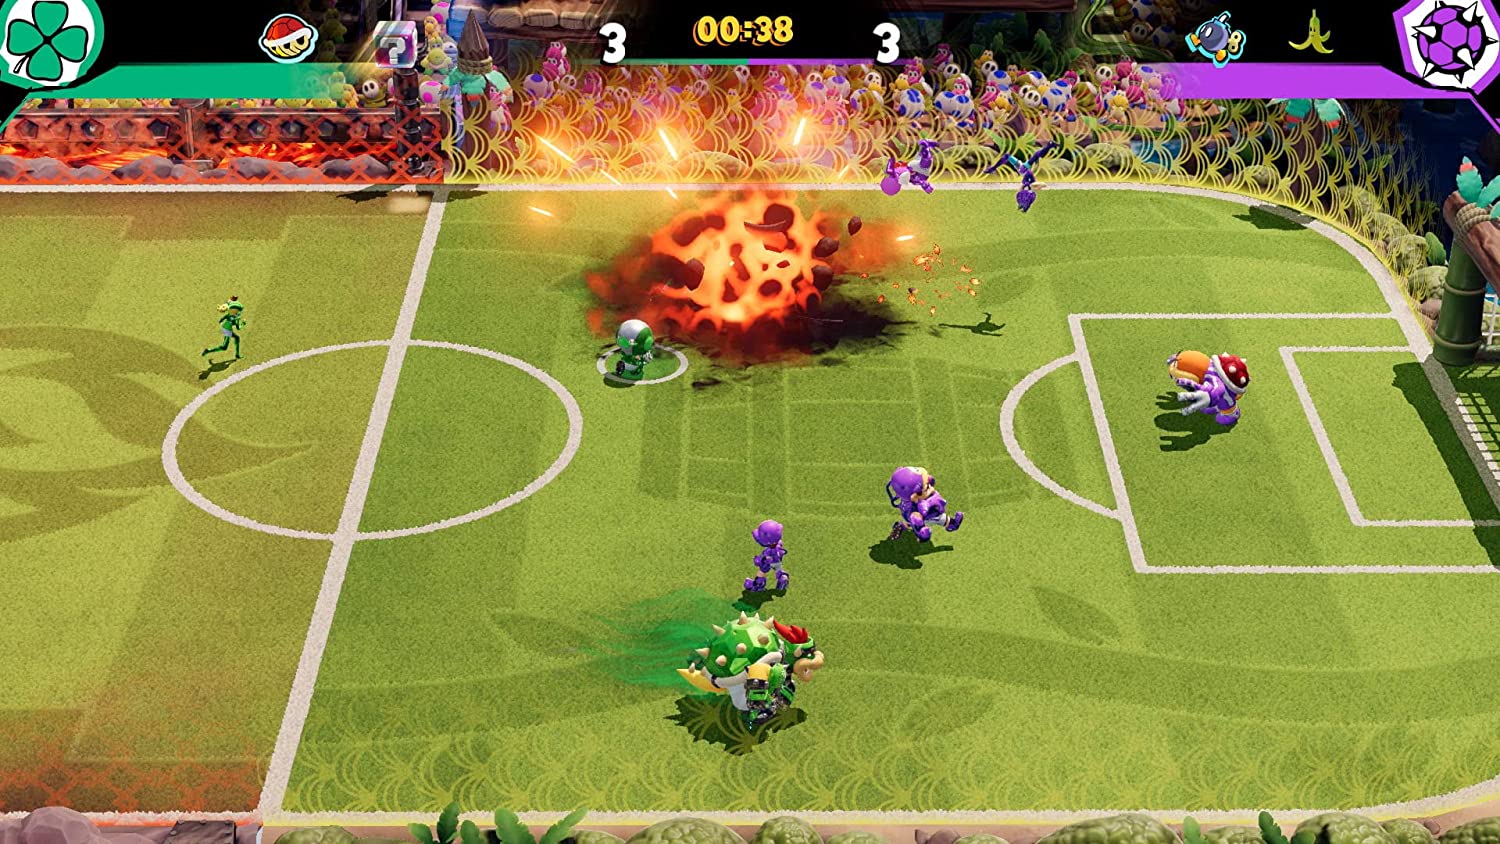 Mario Strikers: Battle League Football, Jogos para a Nintendo Switch, Jogos